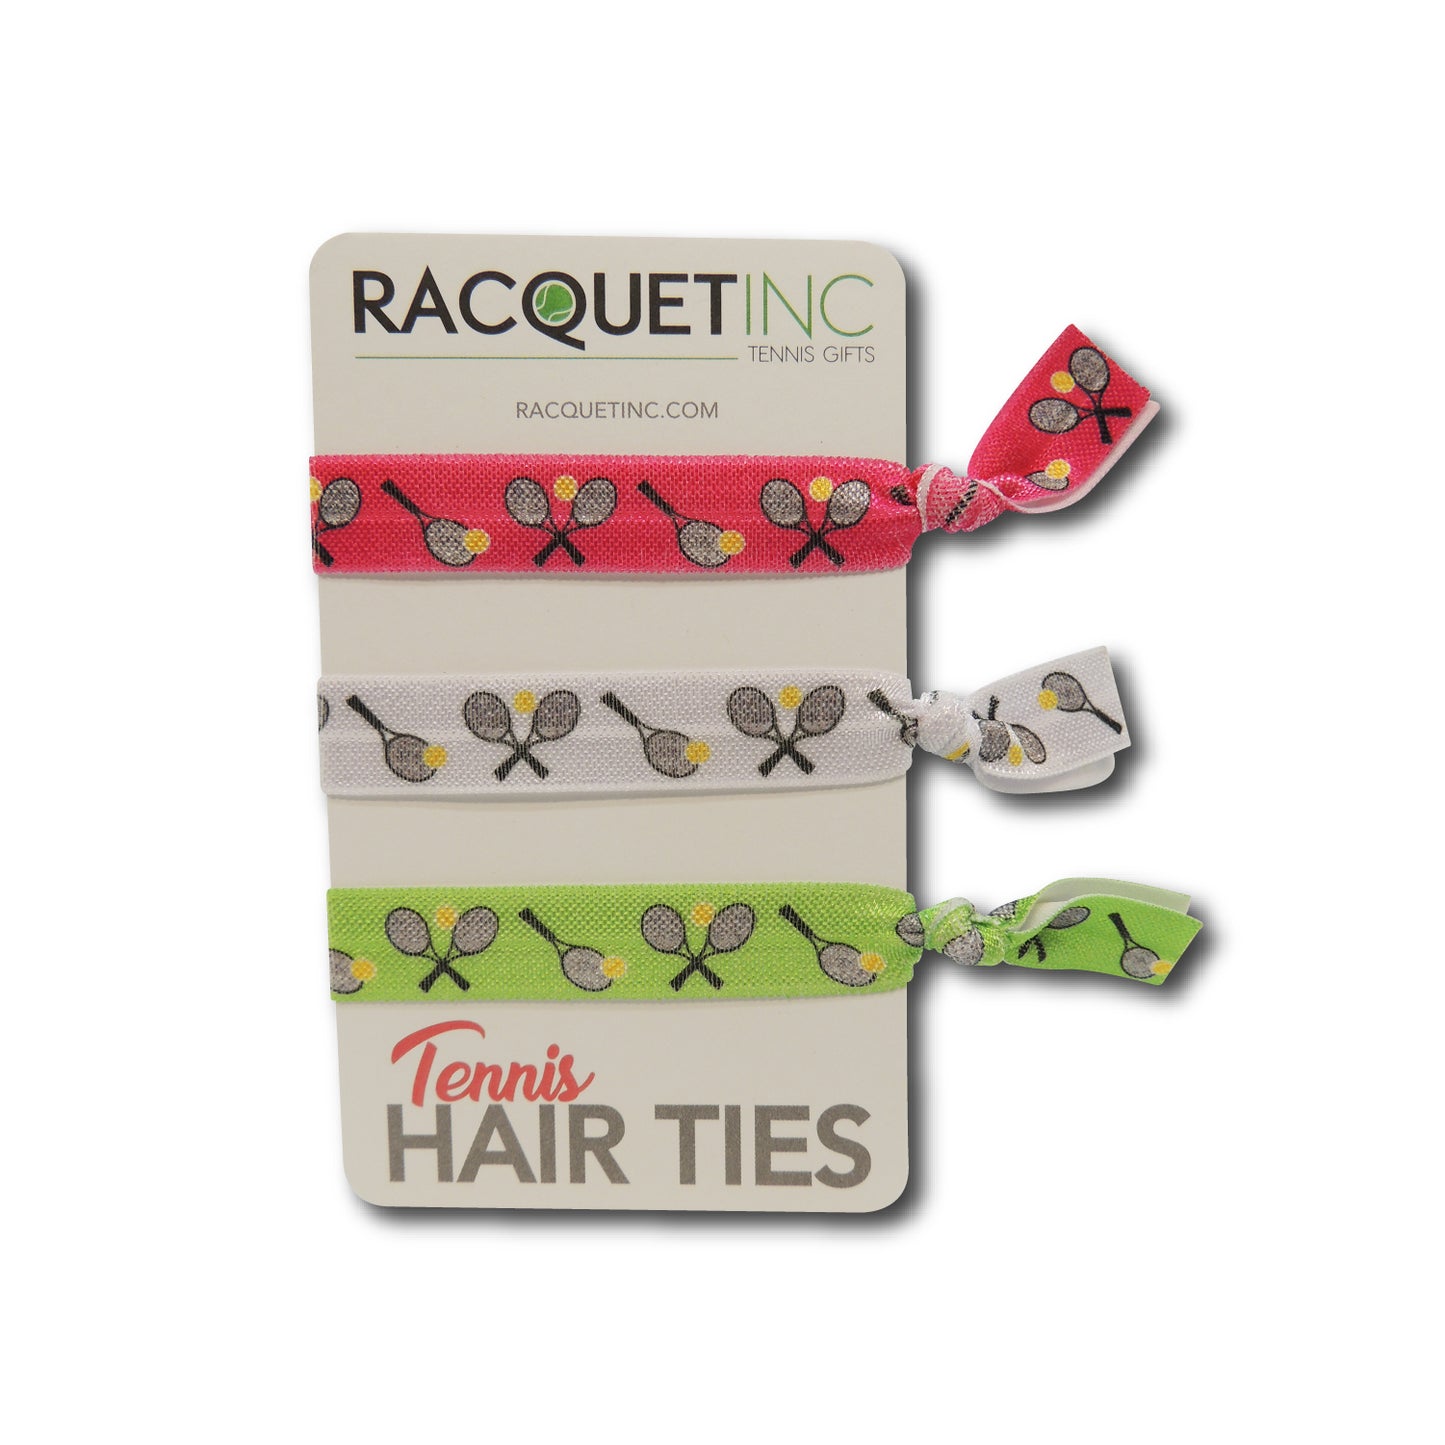 Tennis Hair Ties (3 Pack) - Racquet (Racket) Inc Tennis Gifts